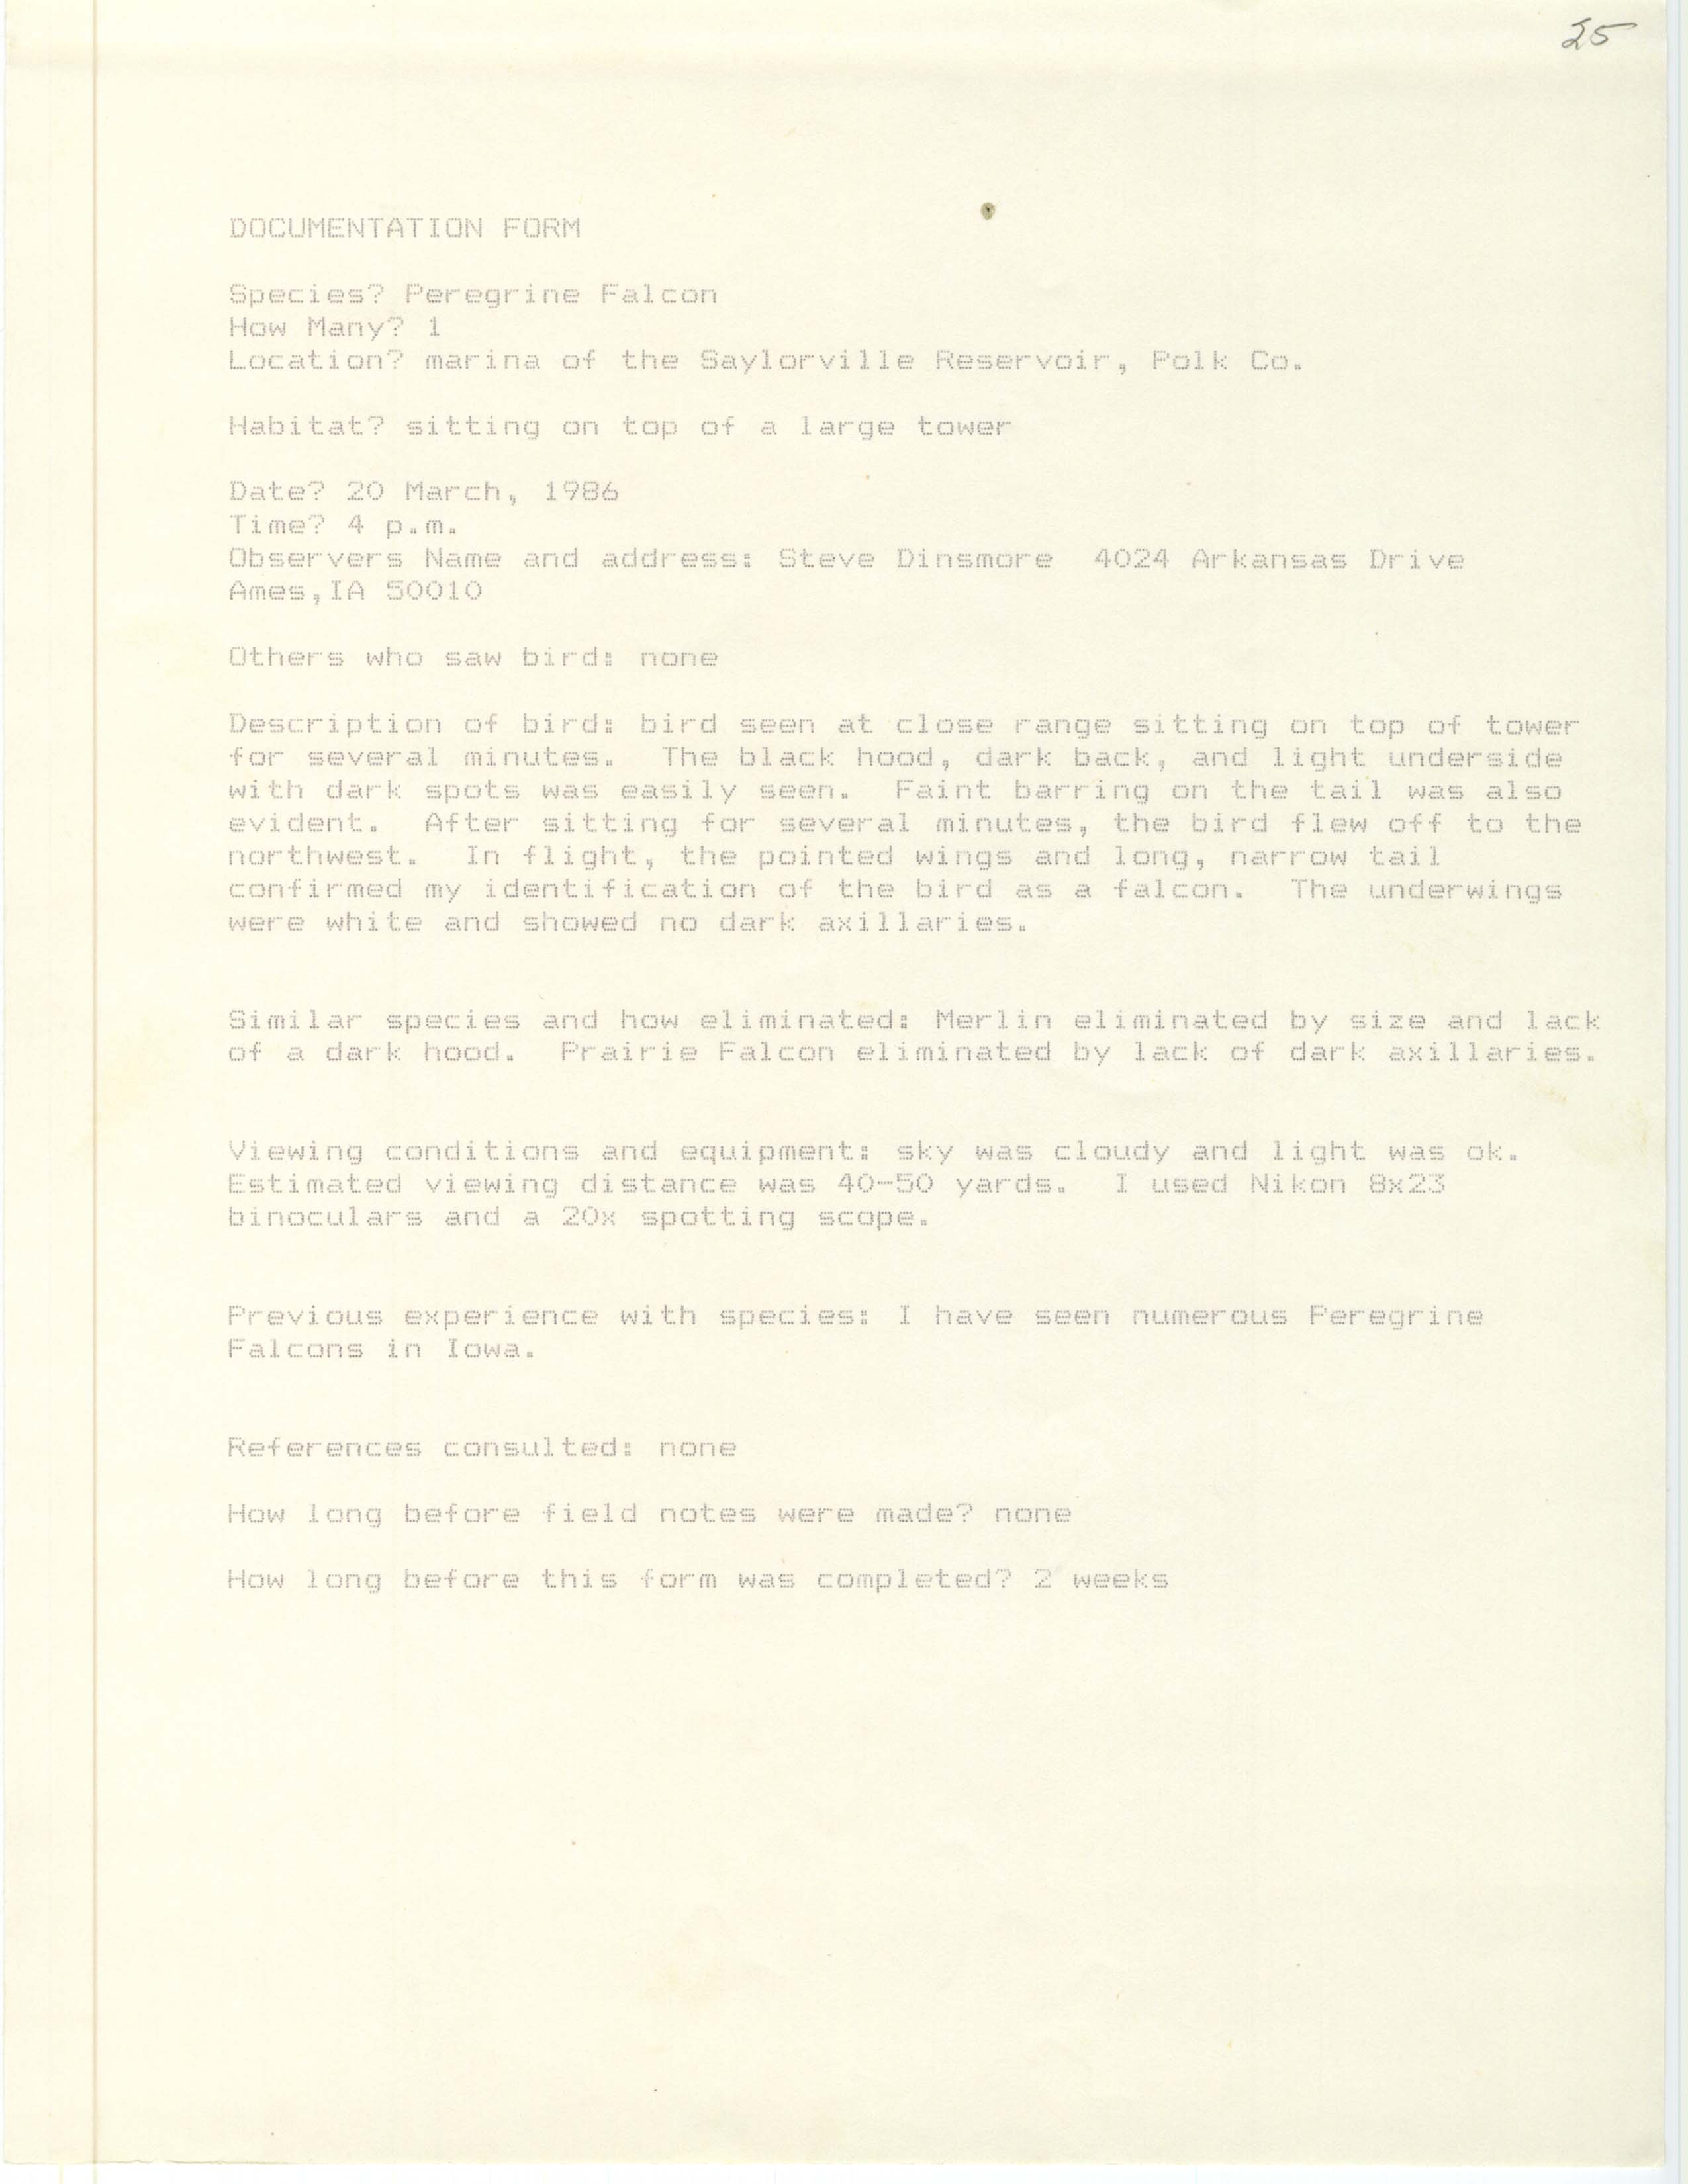 Rare bird documentation form for Peregrine Falcon at Saylorville Reservoir, 1986